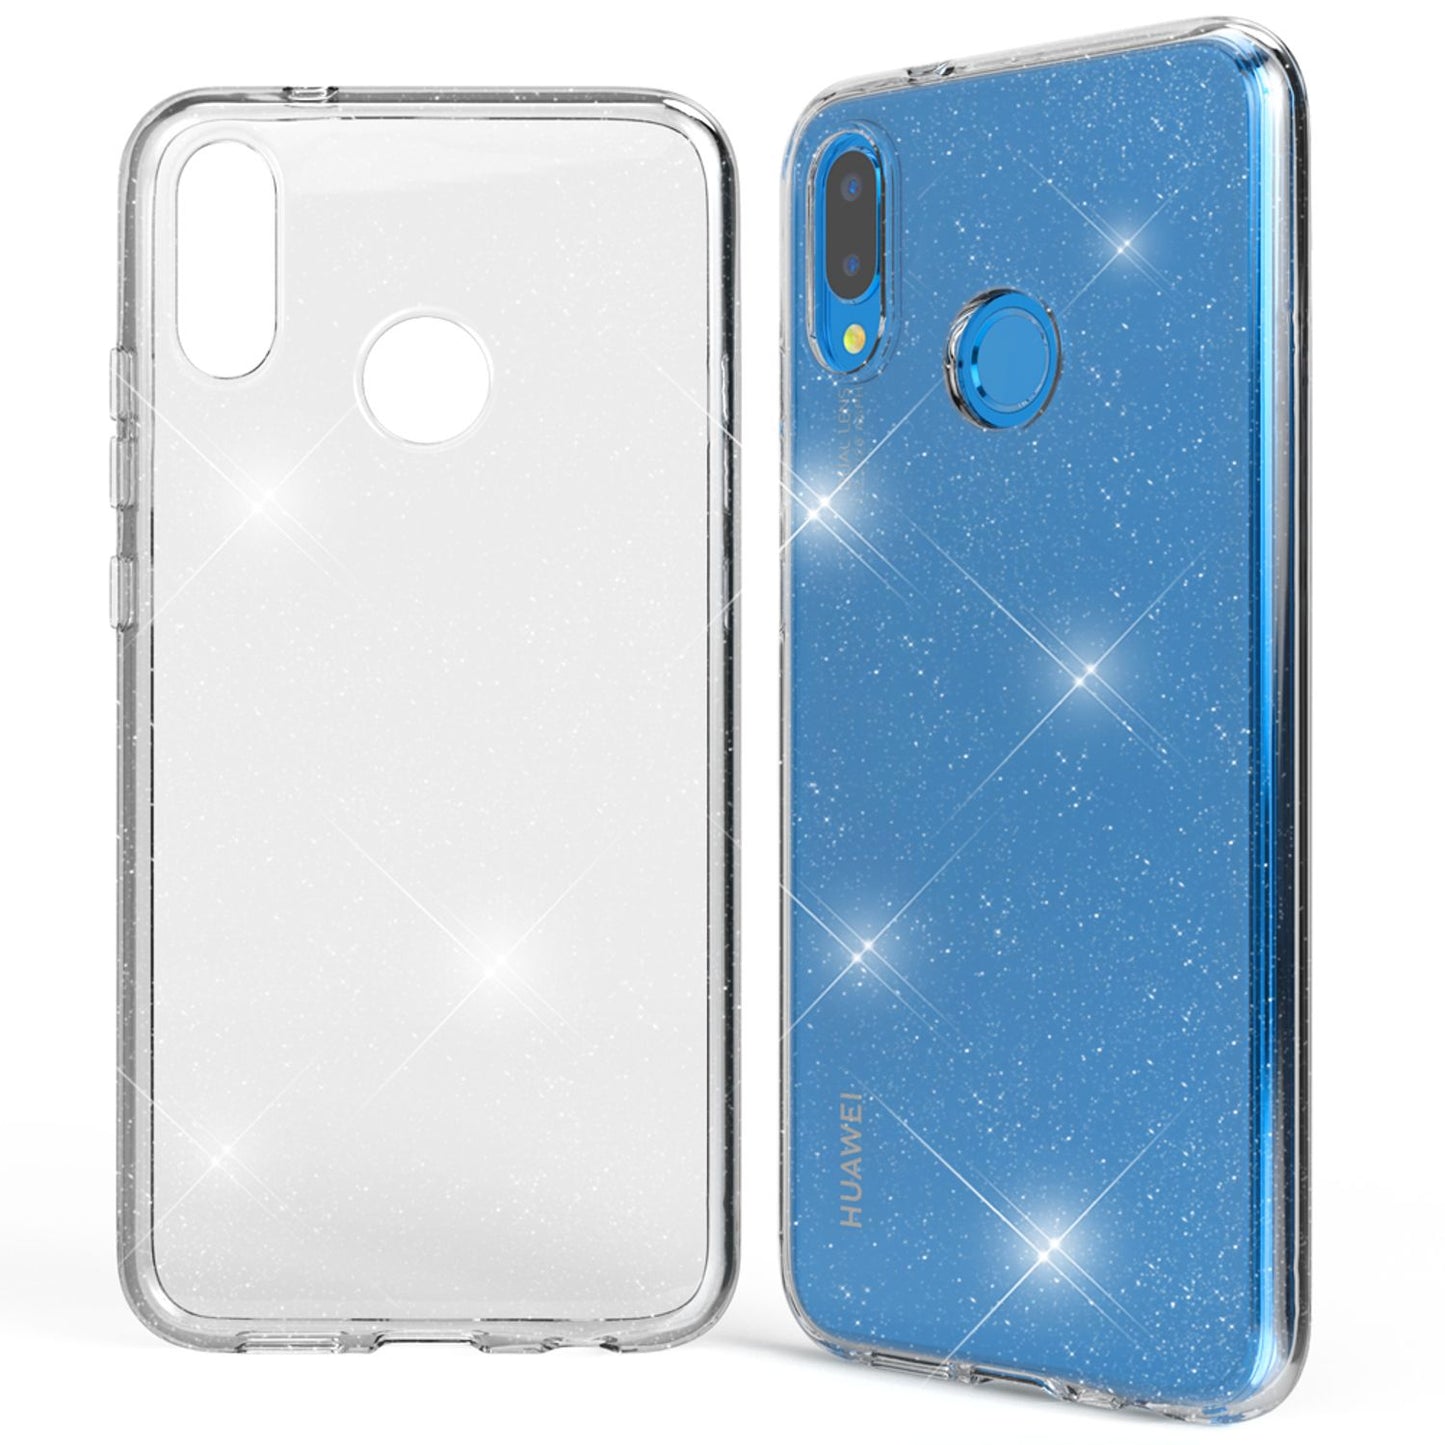 NALIA Glitter Hülle kompatibel mit Huawei P20 Lite Glitzer Handyhülle Case Cover